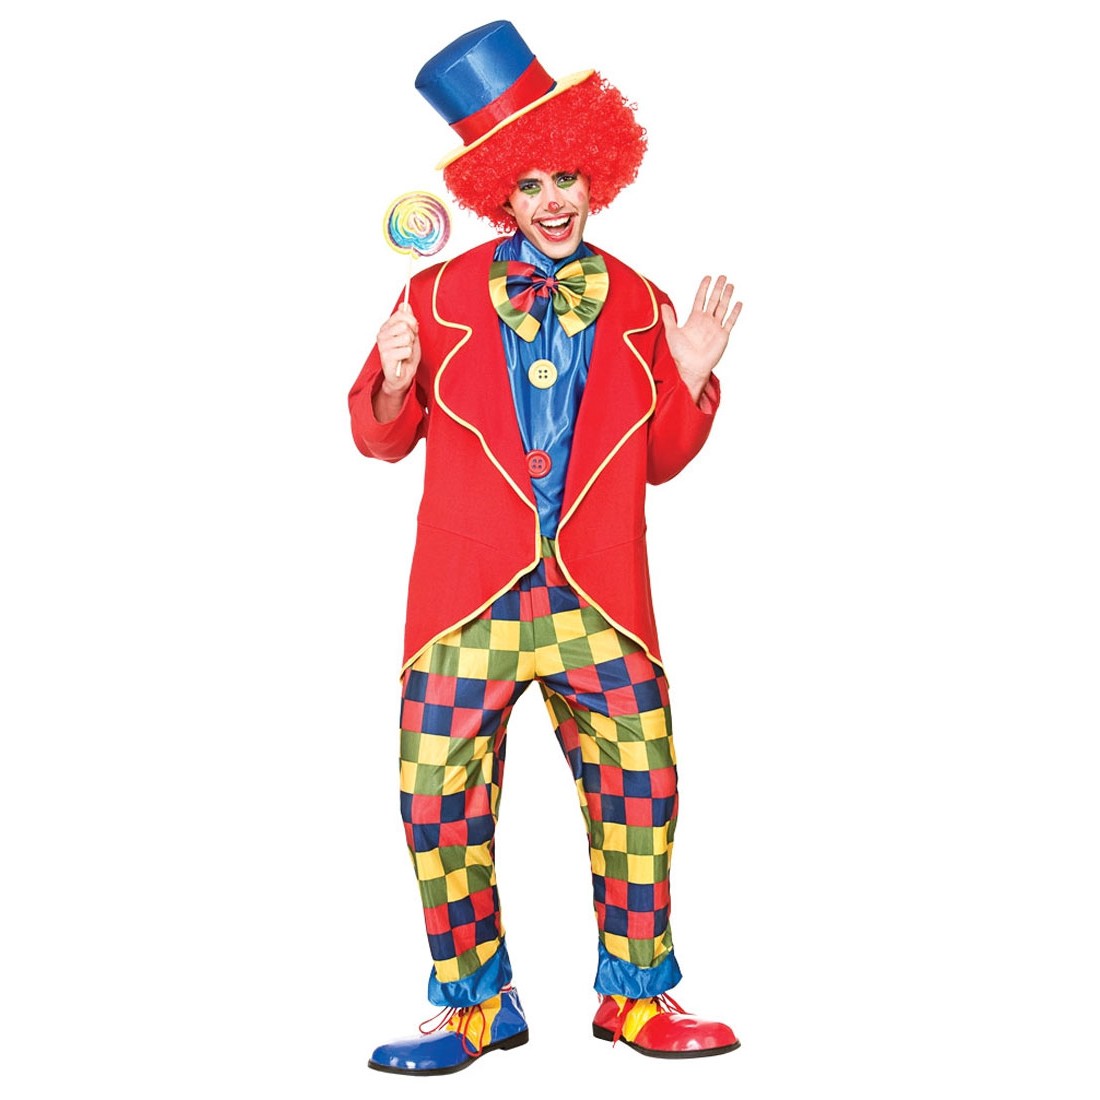 Клоун лист. Костюм клоуна. Клоун в цирке. Костюм циркового клоуна. Клоун в пиджаке.